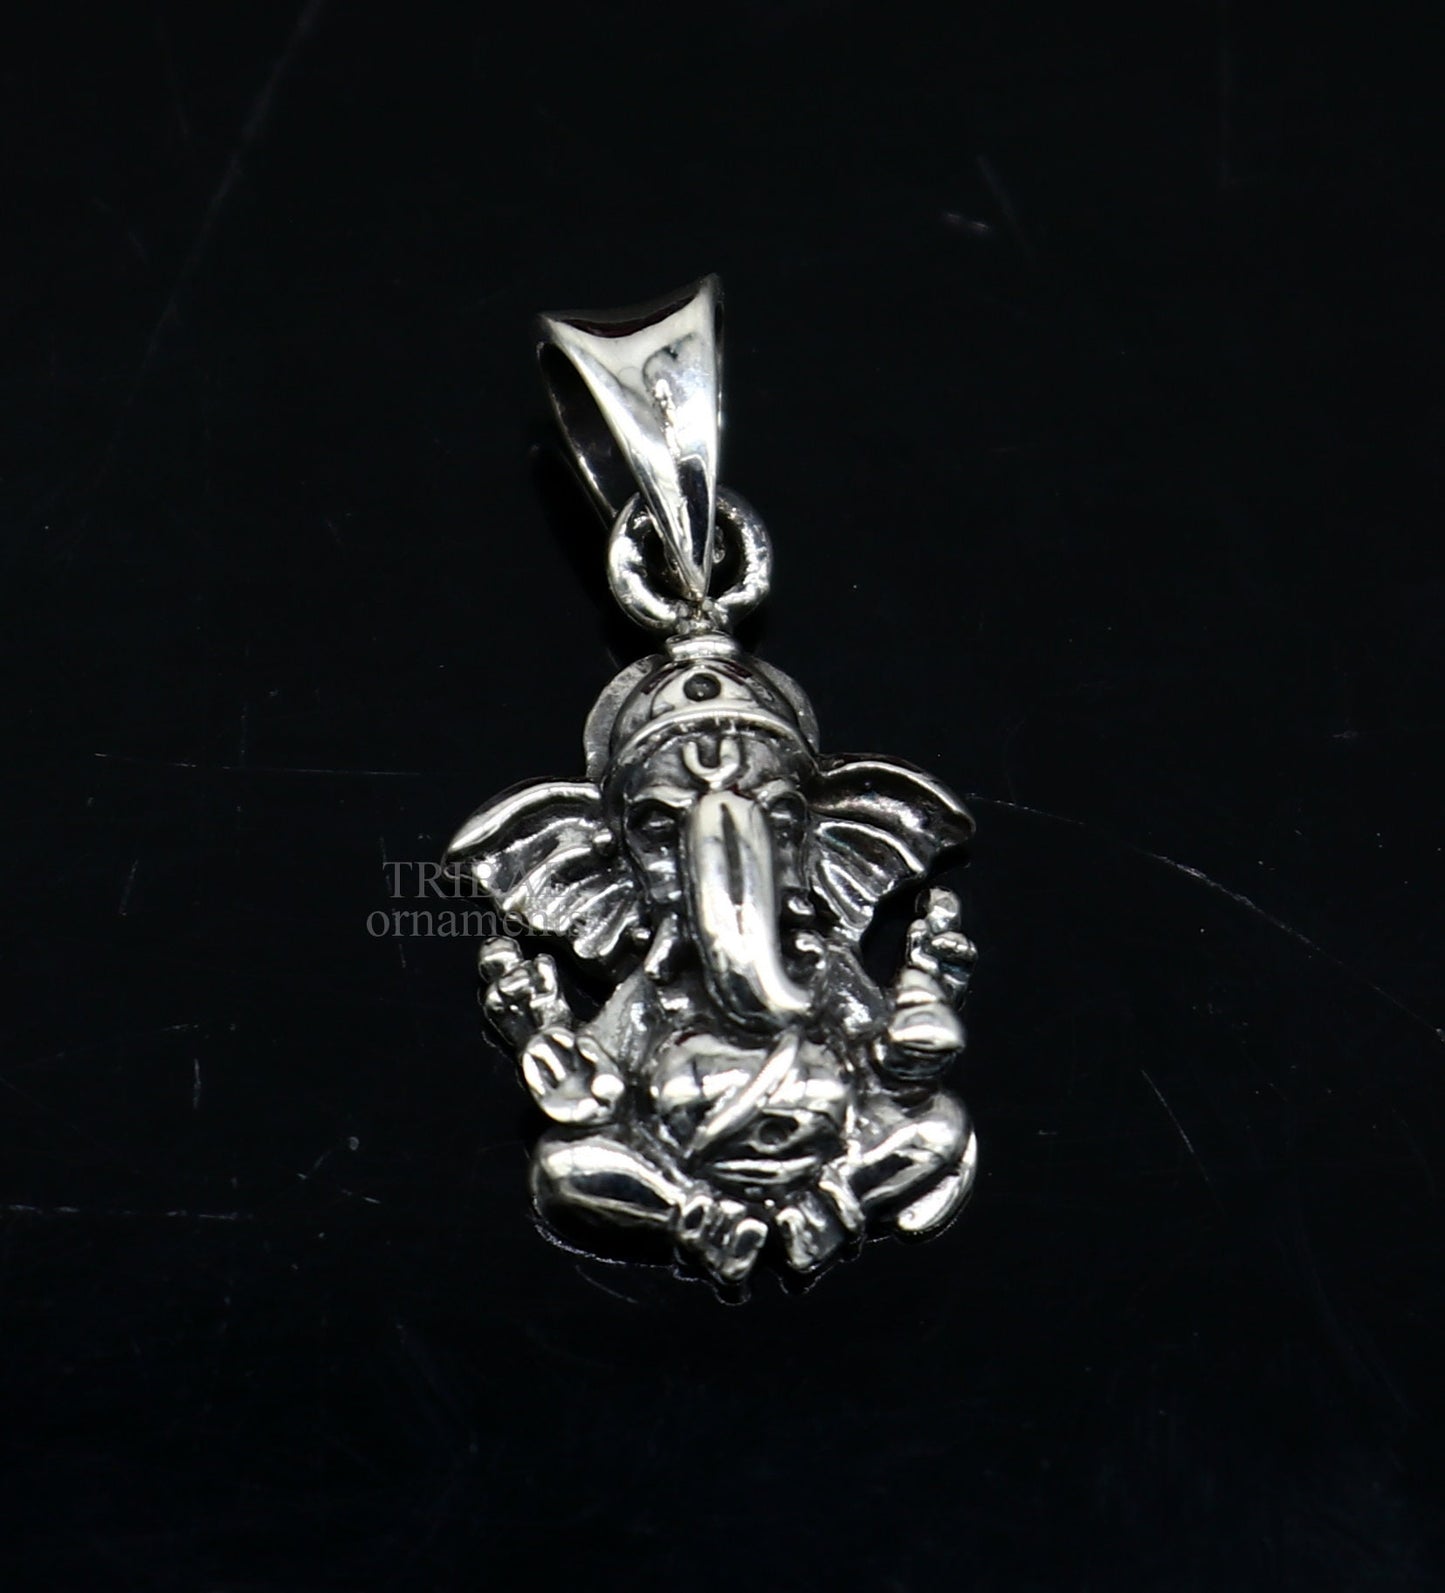 Divine pendant 925 sterling silver handmade Lord Ganesha pendant, amazing stylish unisex pendant personalized jewelry ssp1637 - TRIBAL ORNAMENTS